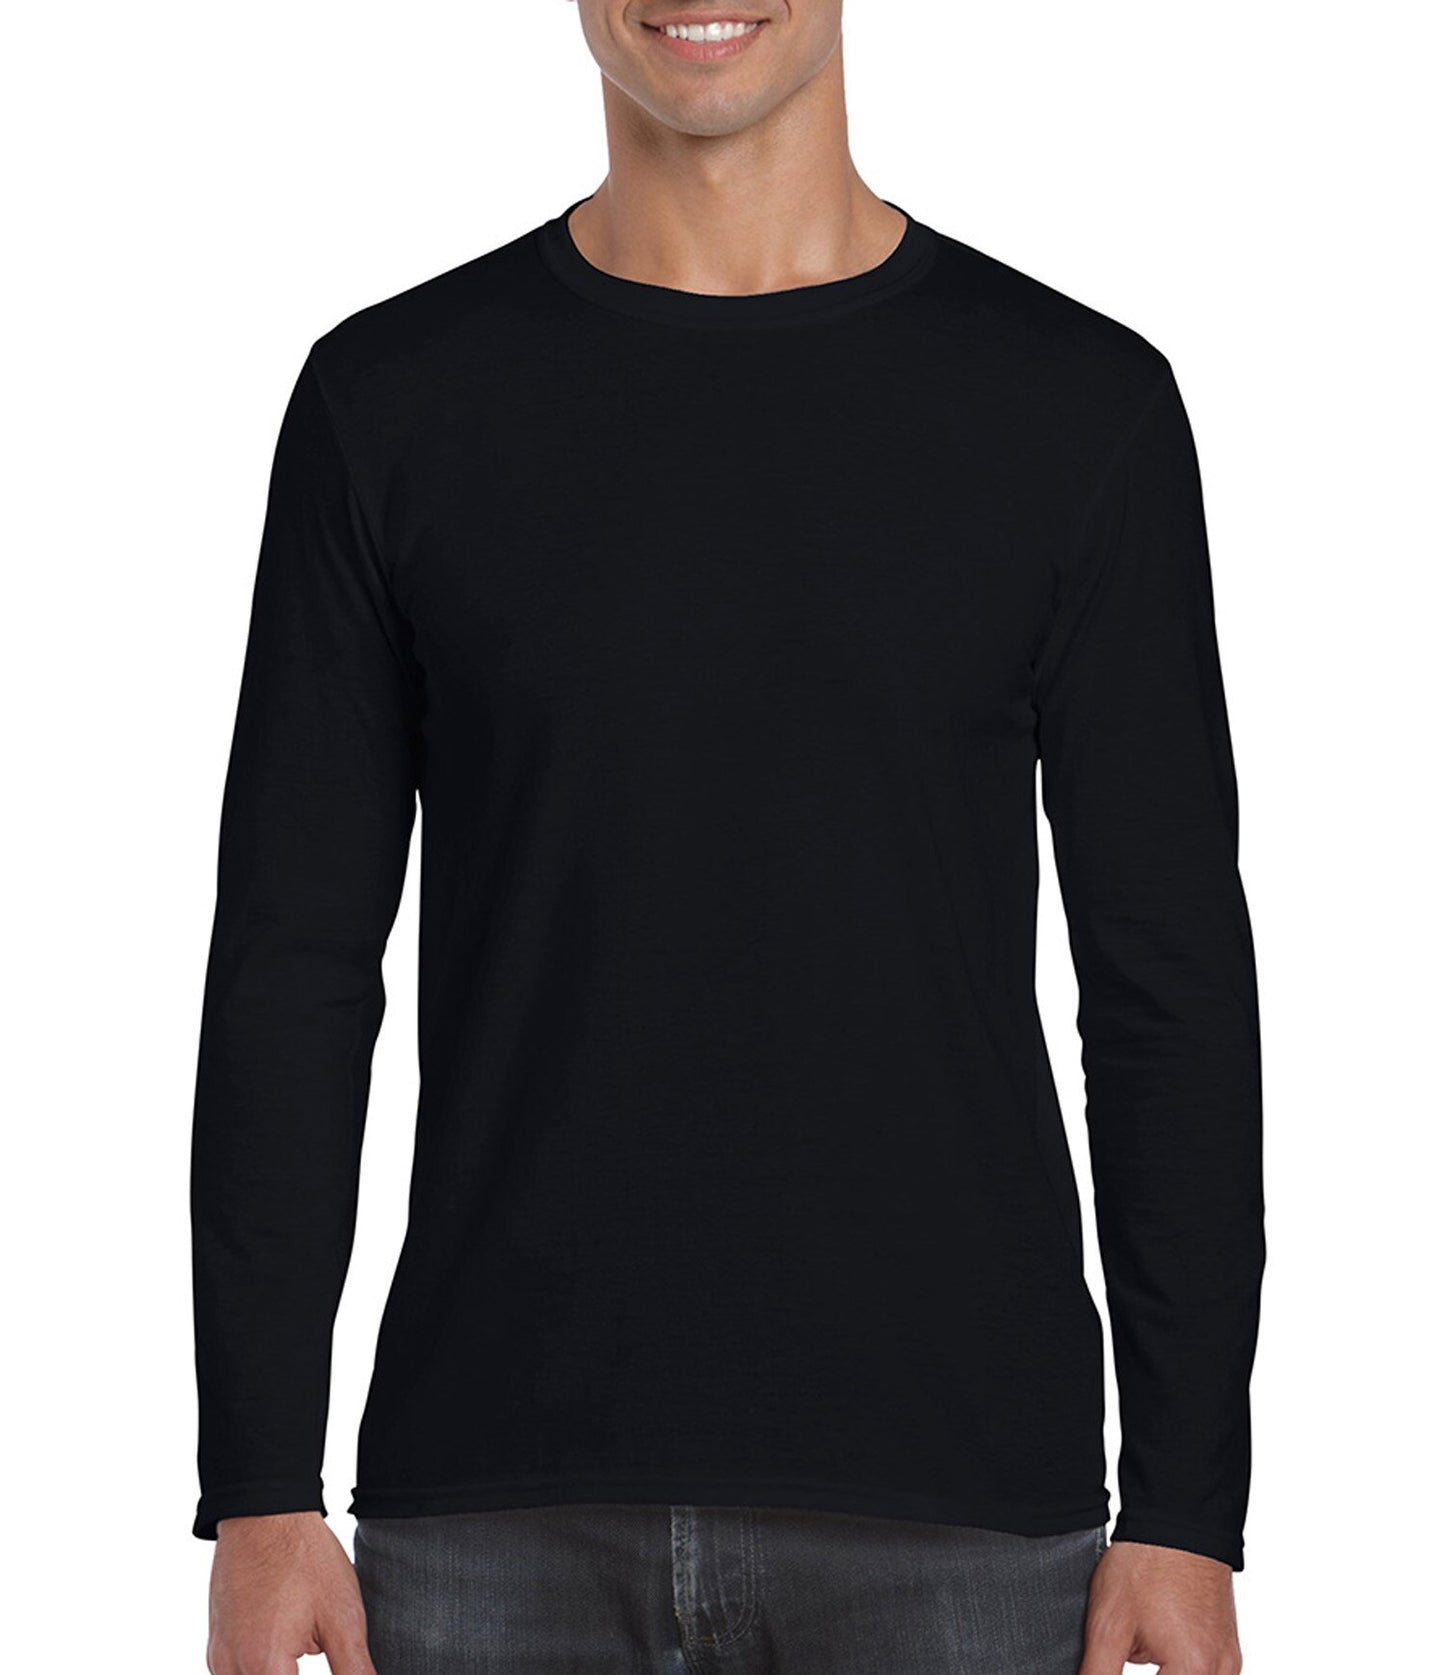 Gojira Men Black T-shirt Metal Band Tee Rock Shirt Lenfant Sauvage Clothes Popular T-Shirt Crewneck 100% Cotton Tees